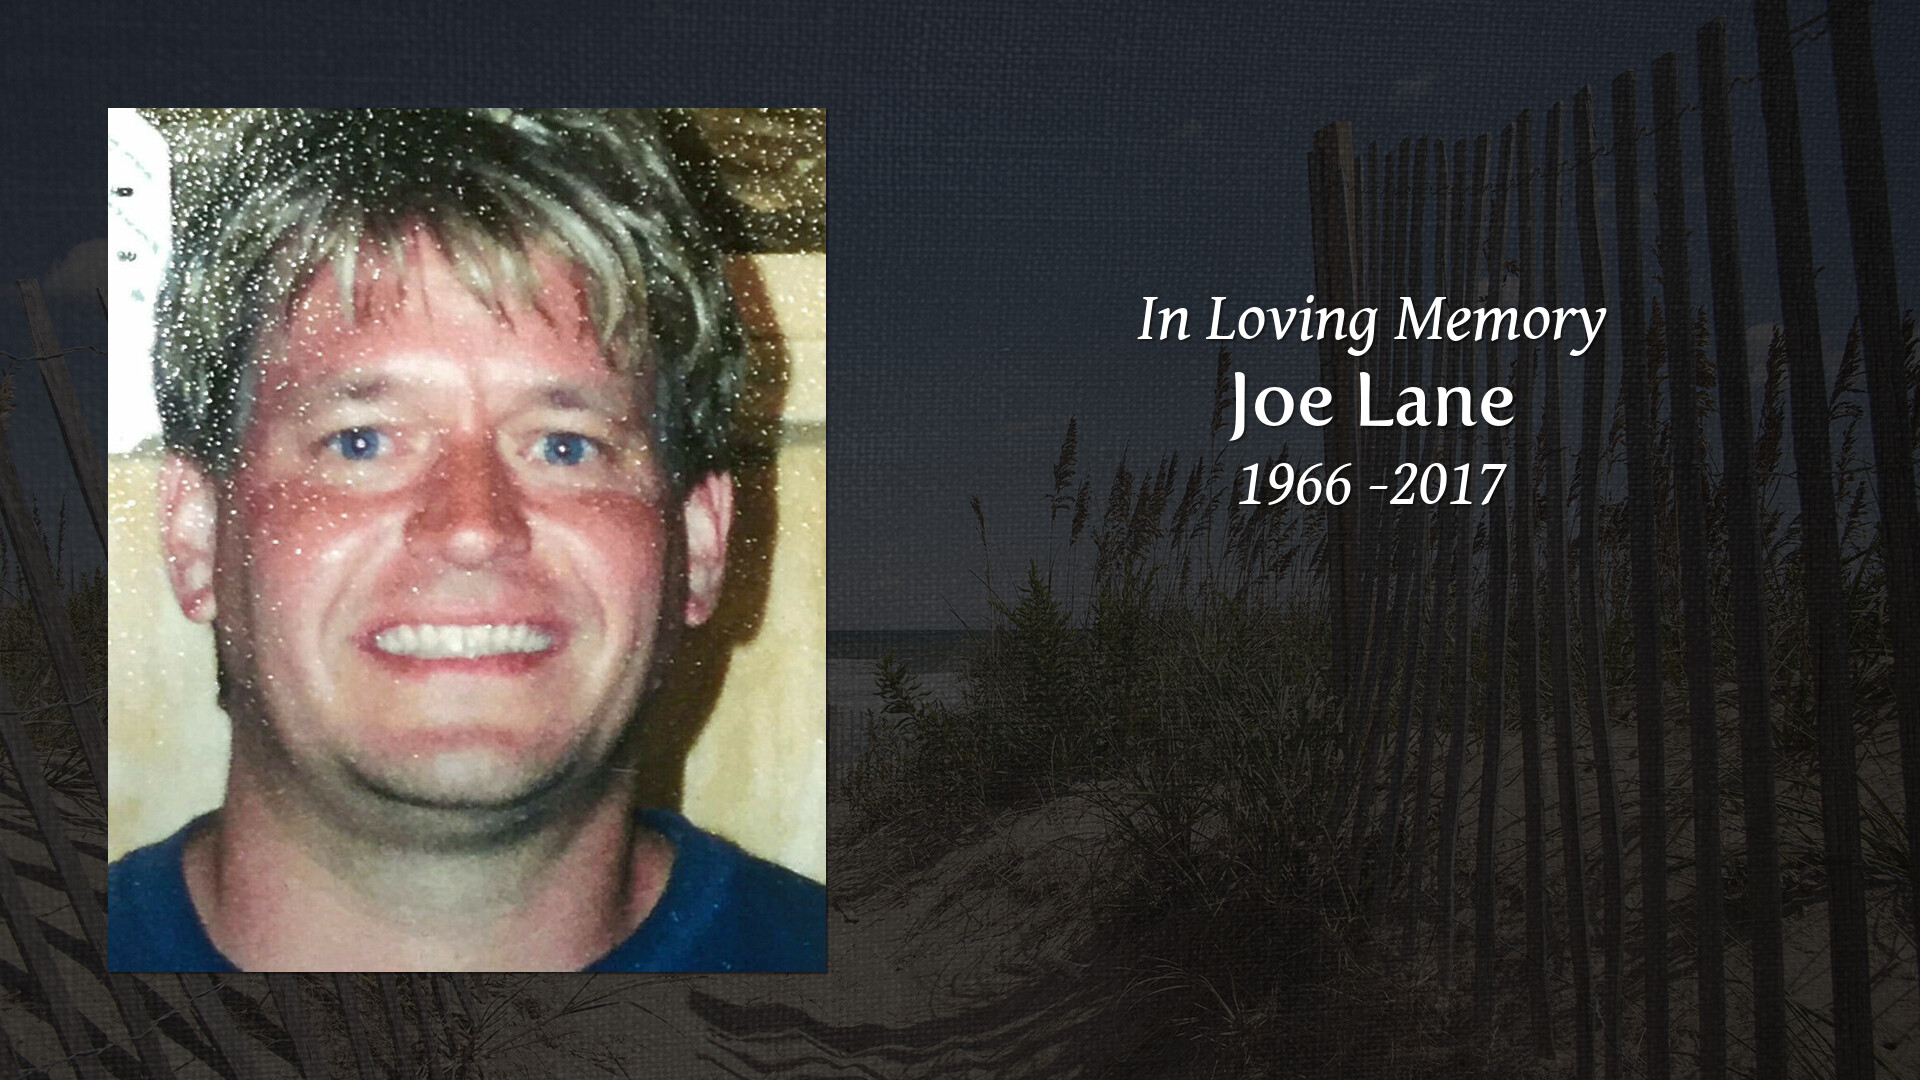 Joe Lane Tribute Video